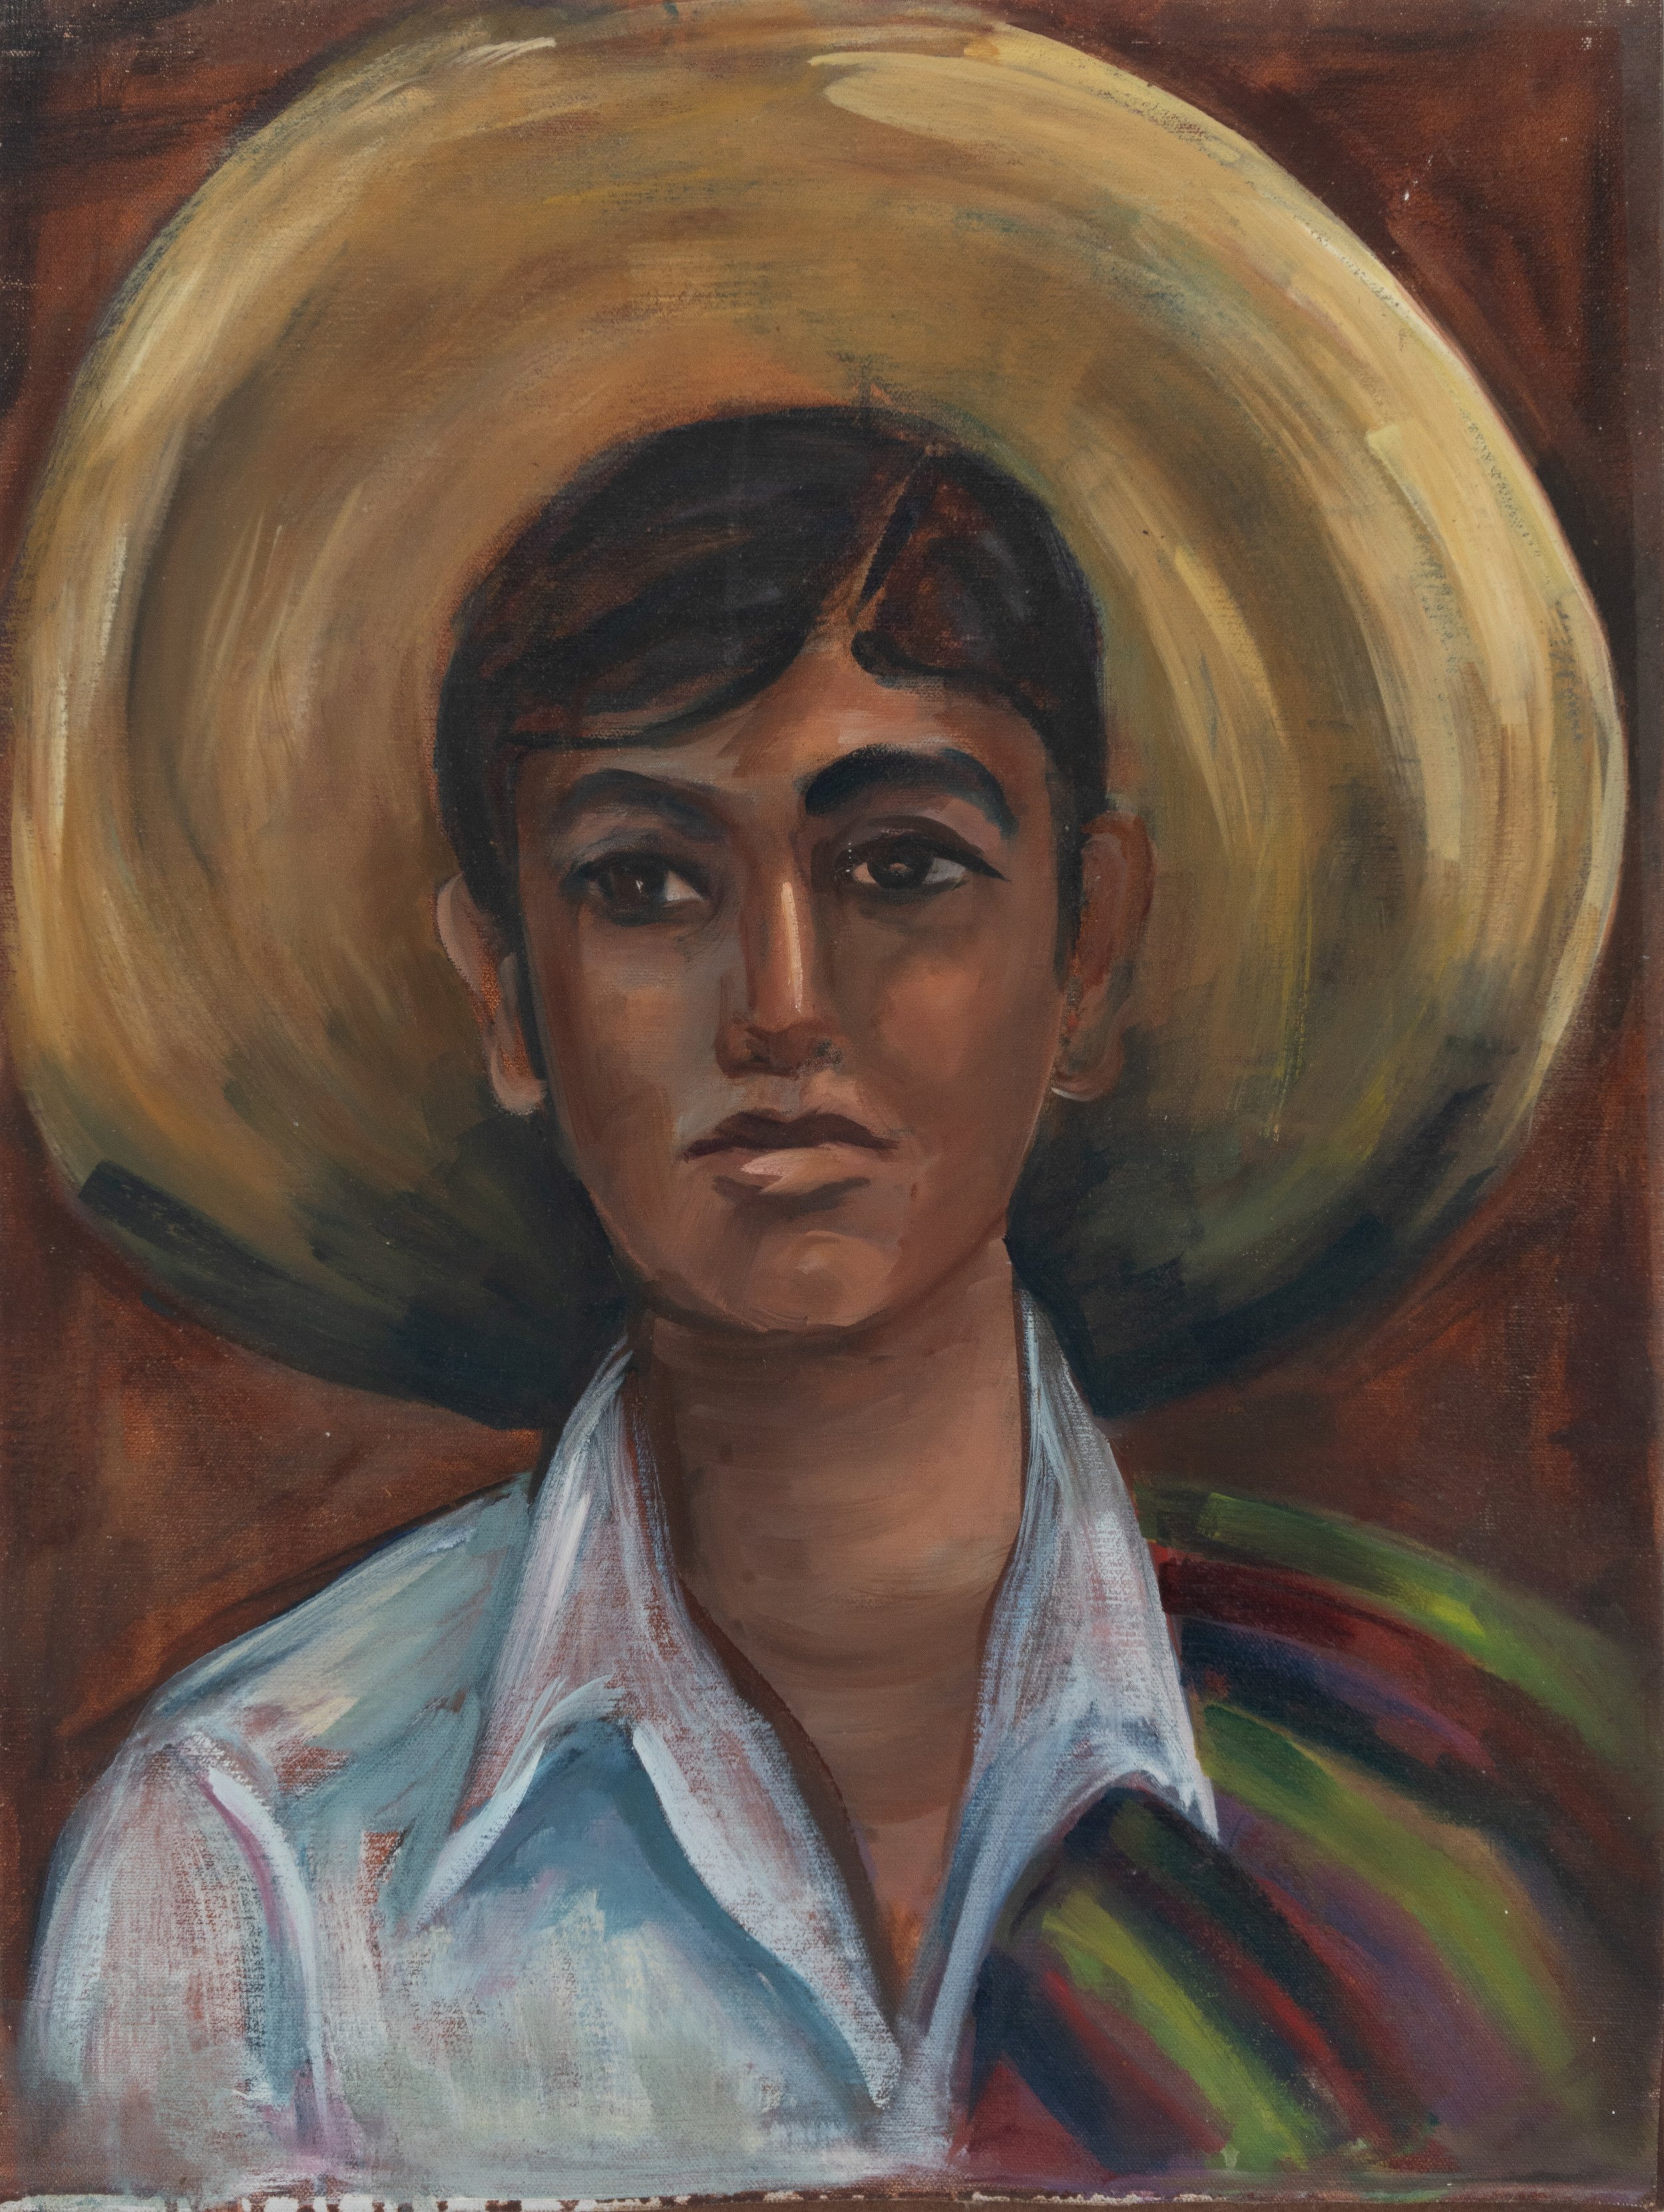 Boy with a Sombrero, 1969, oil on masonite, 24x18 inches